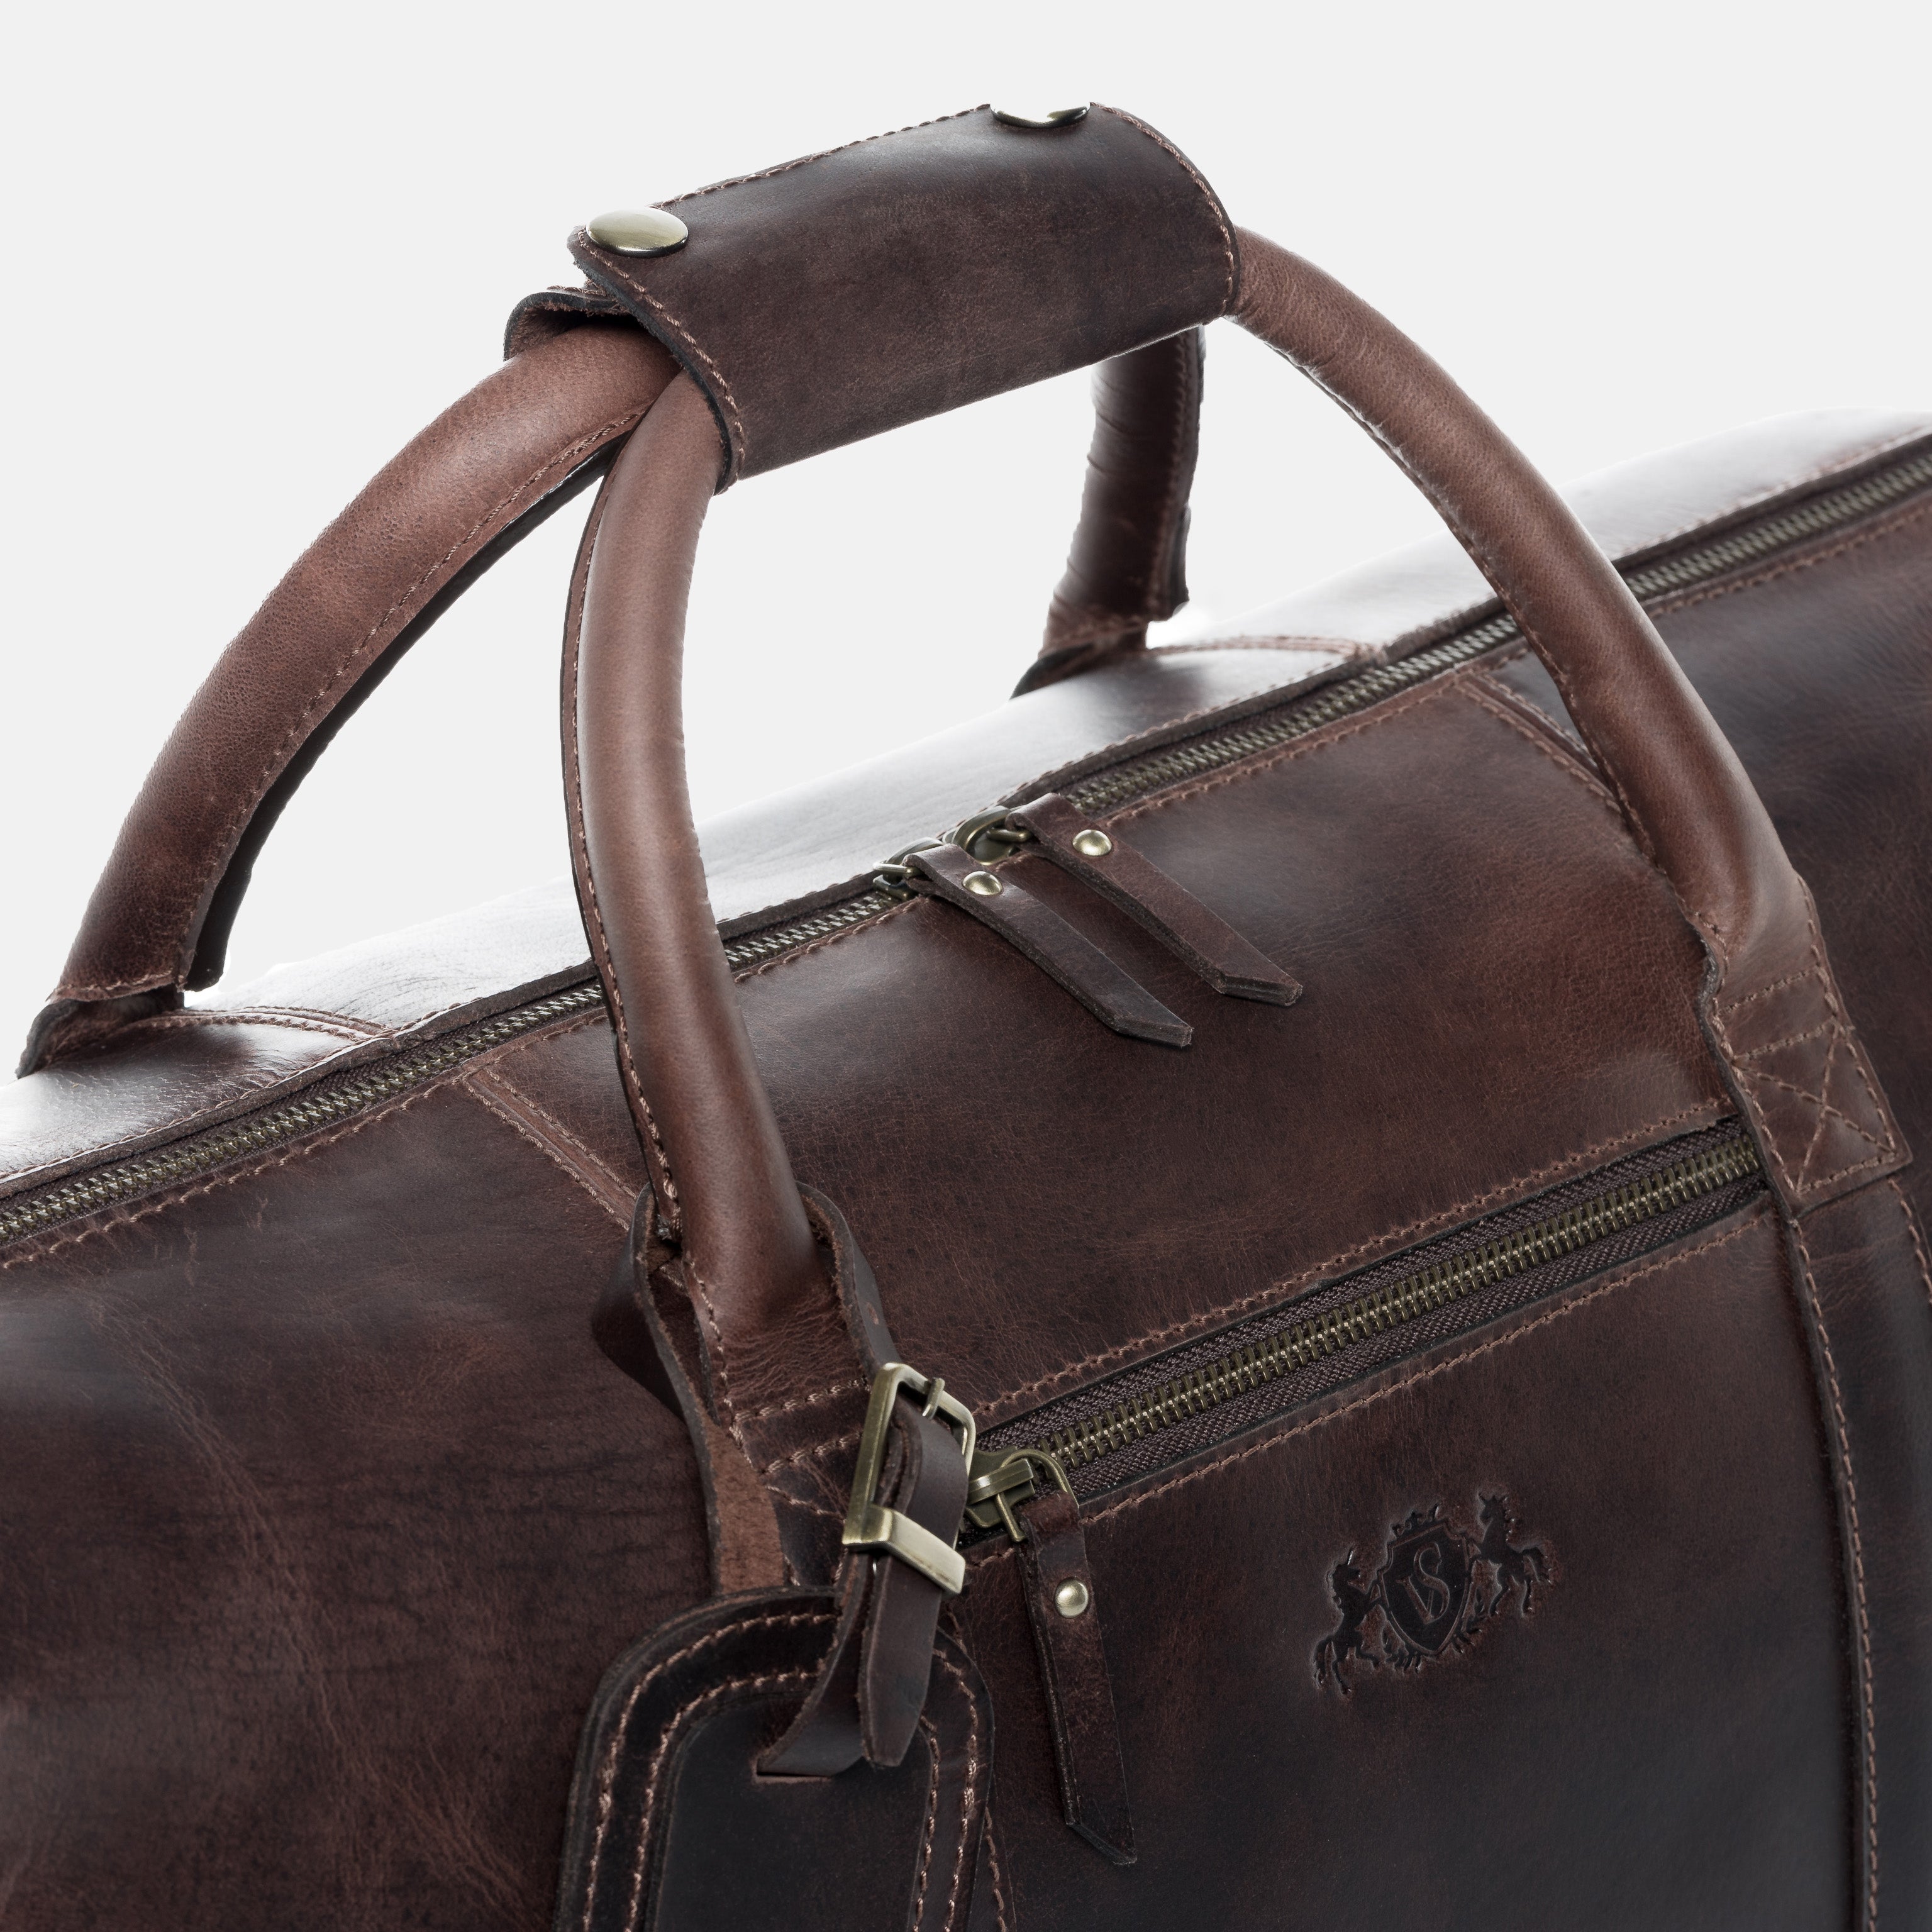 Travel bag CHAD buffalo leather vintage brown